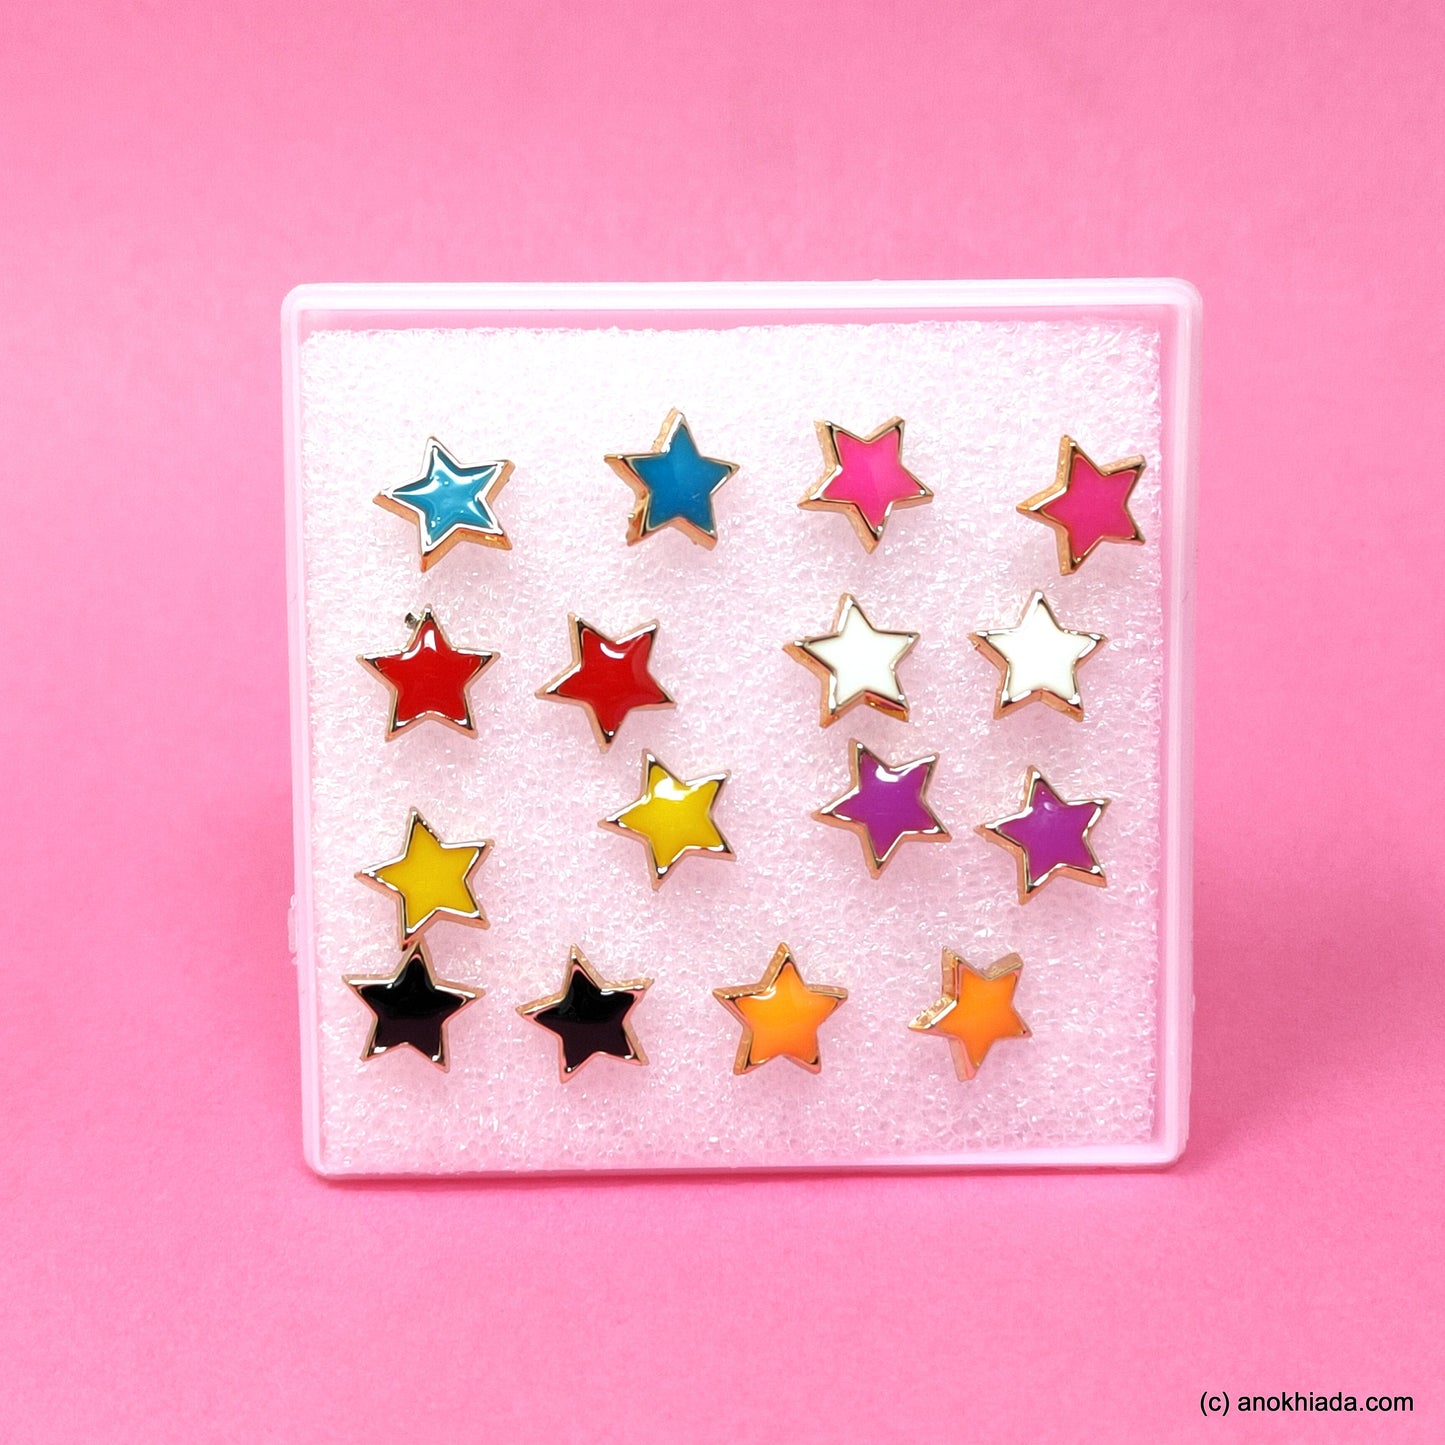 Anokhi Ada Plastic Star Stud Earrings for Girls and Women (Multi-Colour, Pack of 8 Pairs)-AR-01-b